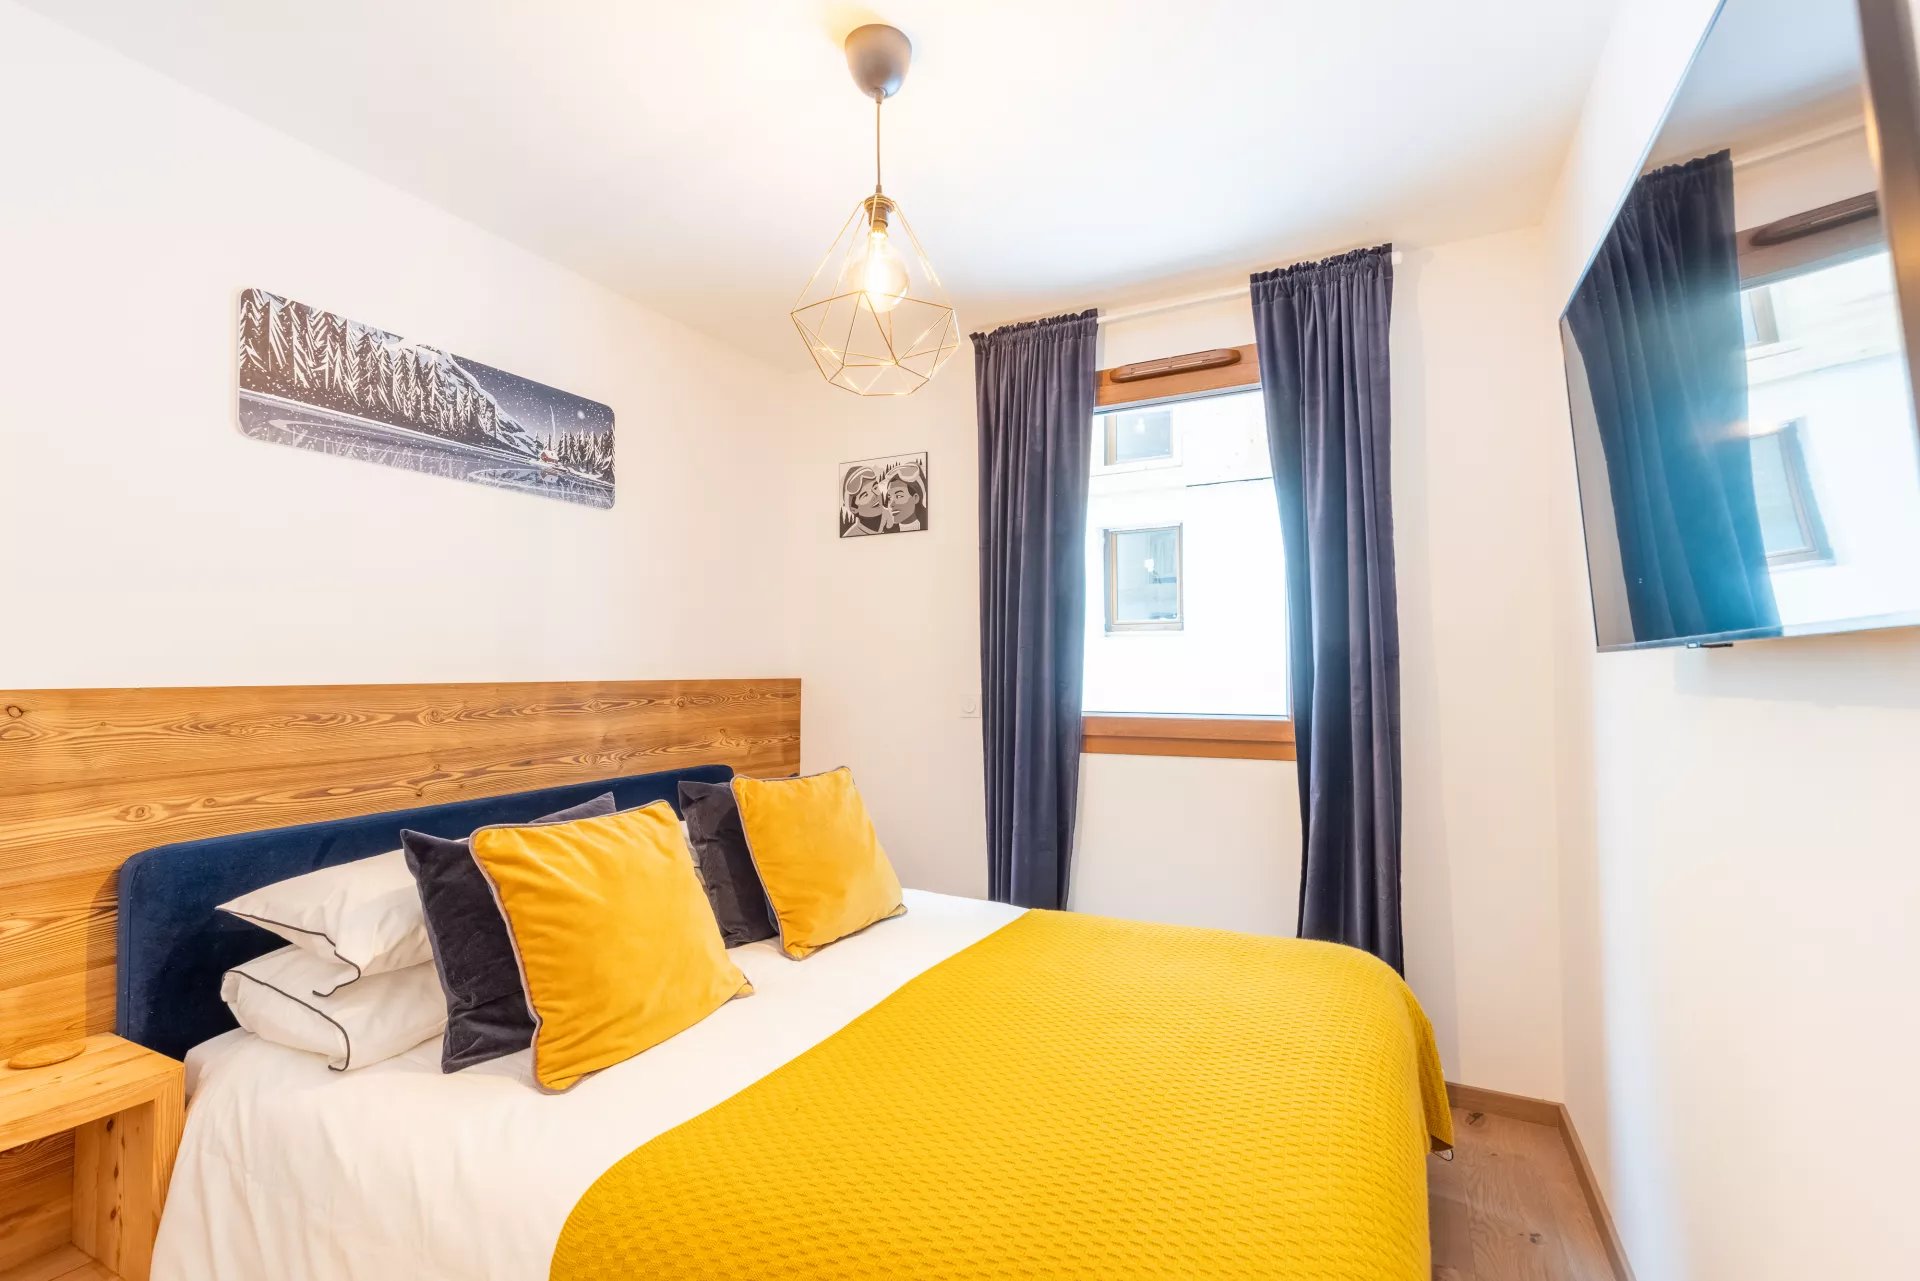 Rental apartment: Newly built 2 bed, 2 bath apartment with terrace near to Prodains Gondola.